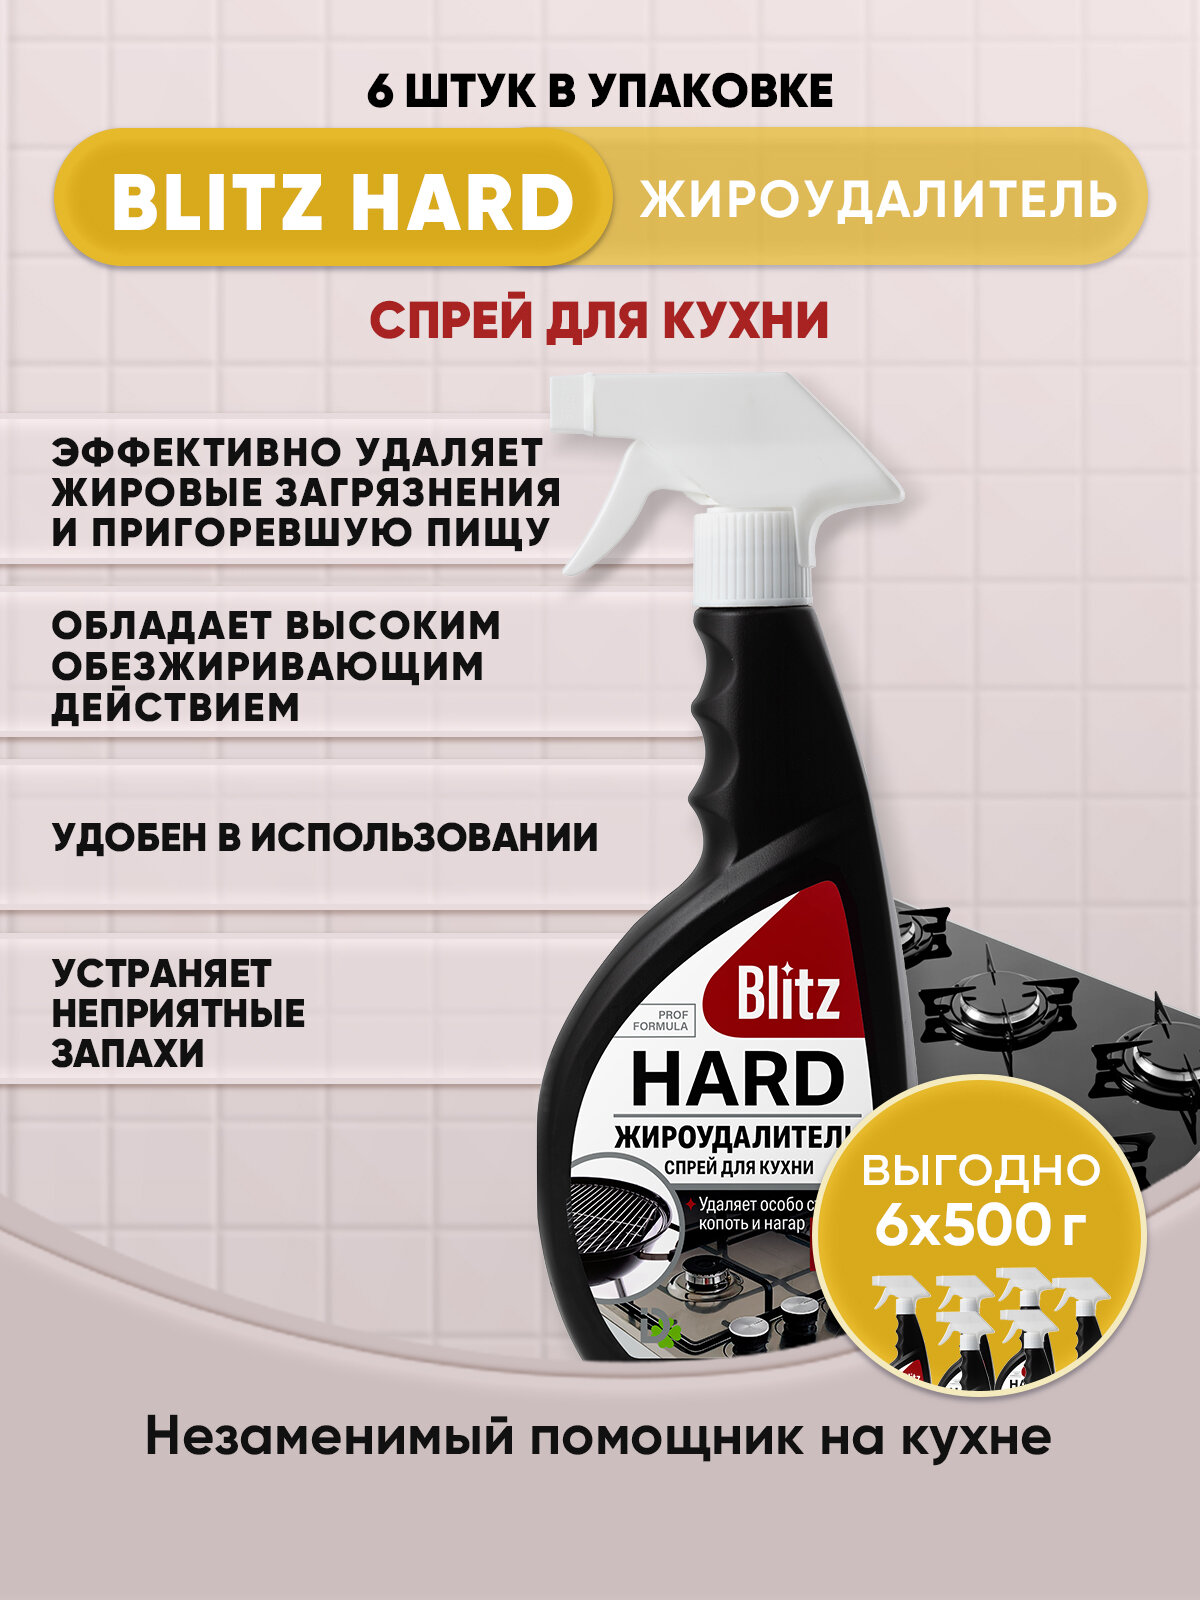 BLITZ HARD Жироудалитель спрей для кухни 500г/6шт